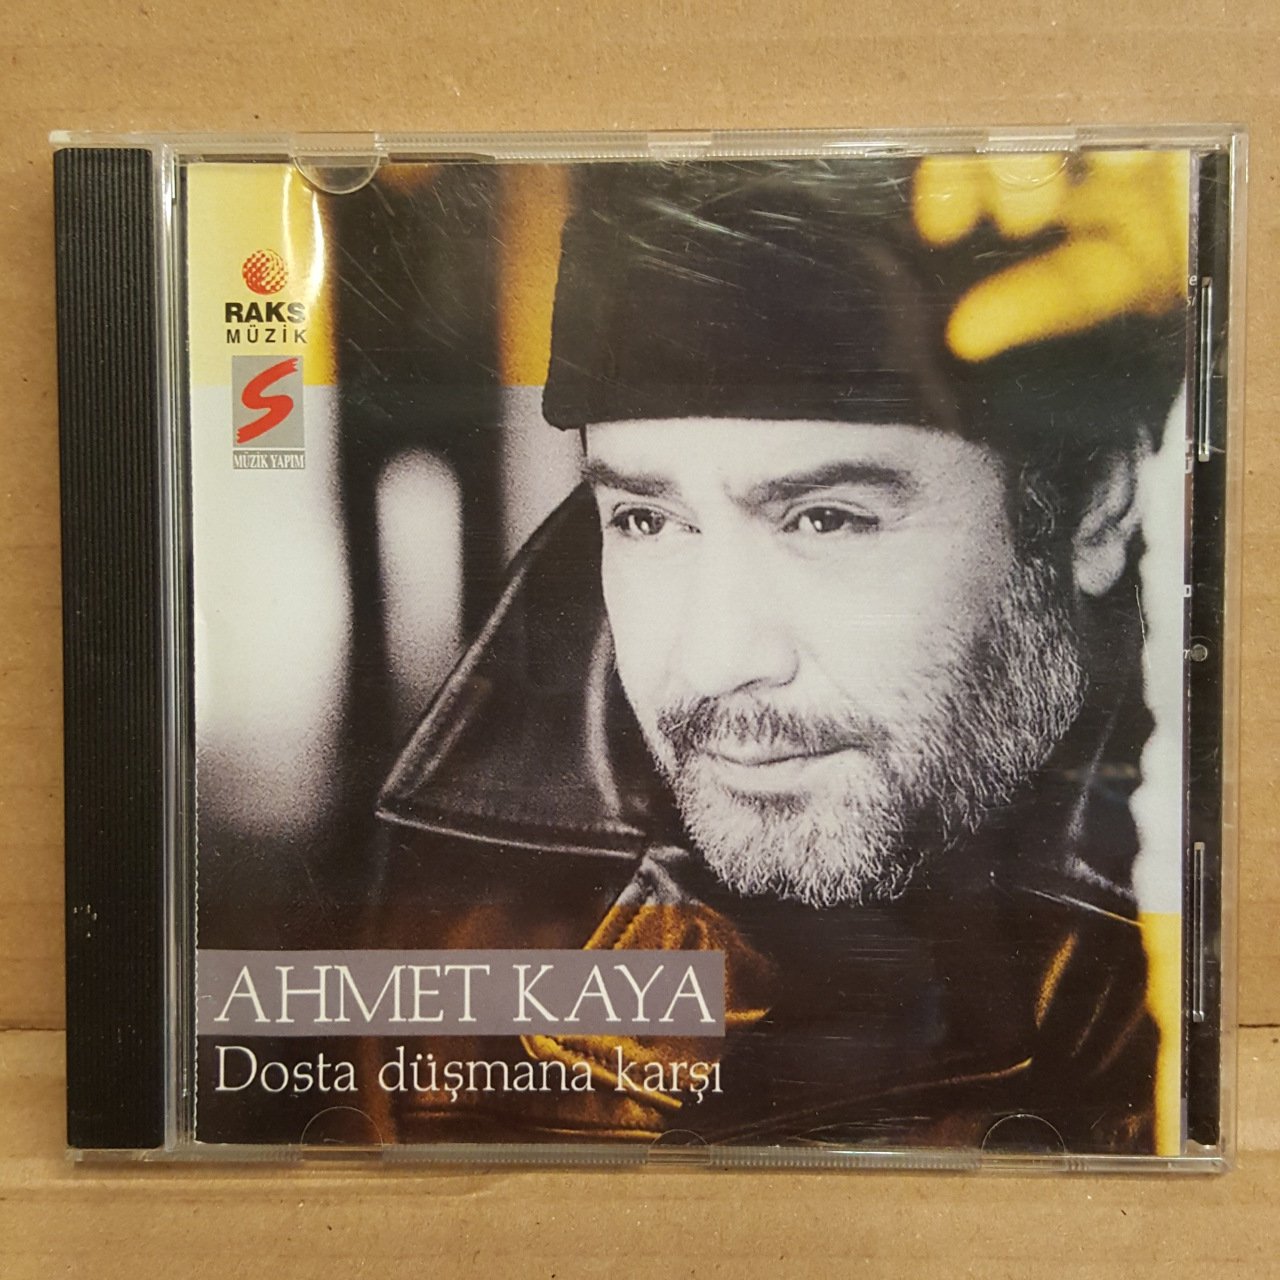 AHMET KAYA - DOSTA DÜŞMANA KARŞI (1998) - CD RAKS BASKI ESKİ METALİK BANDROL 2.EL